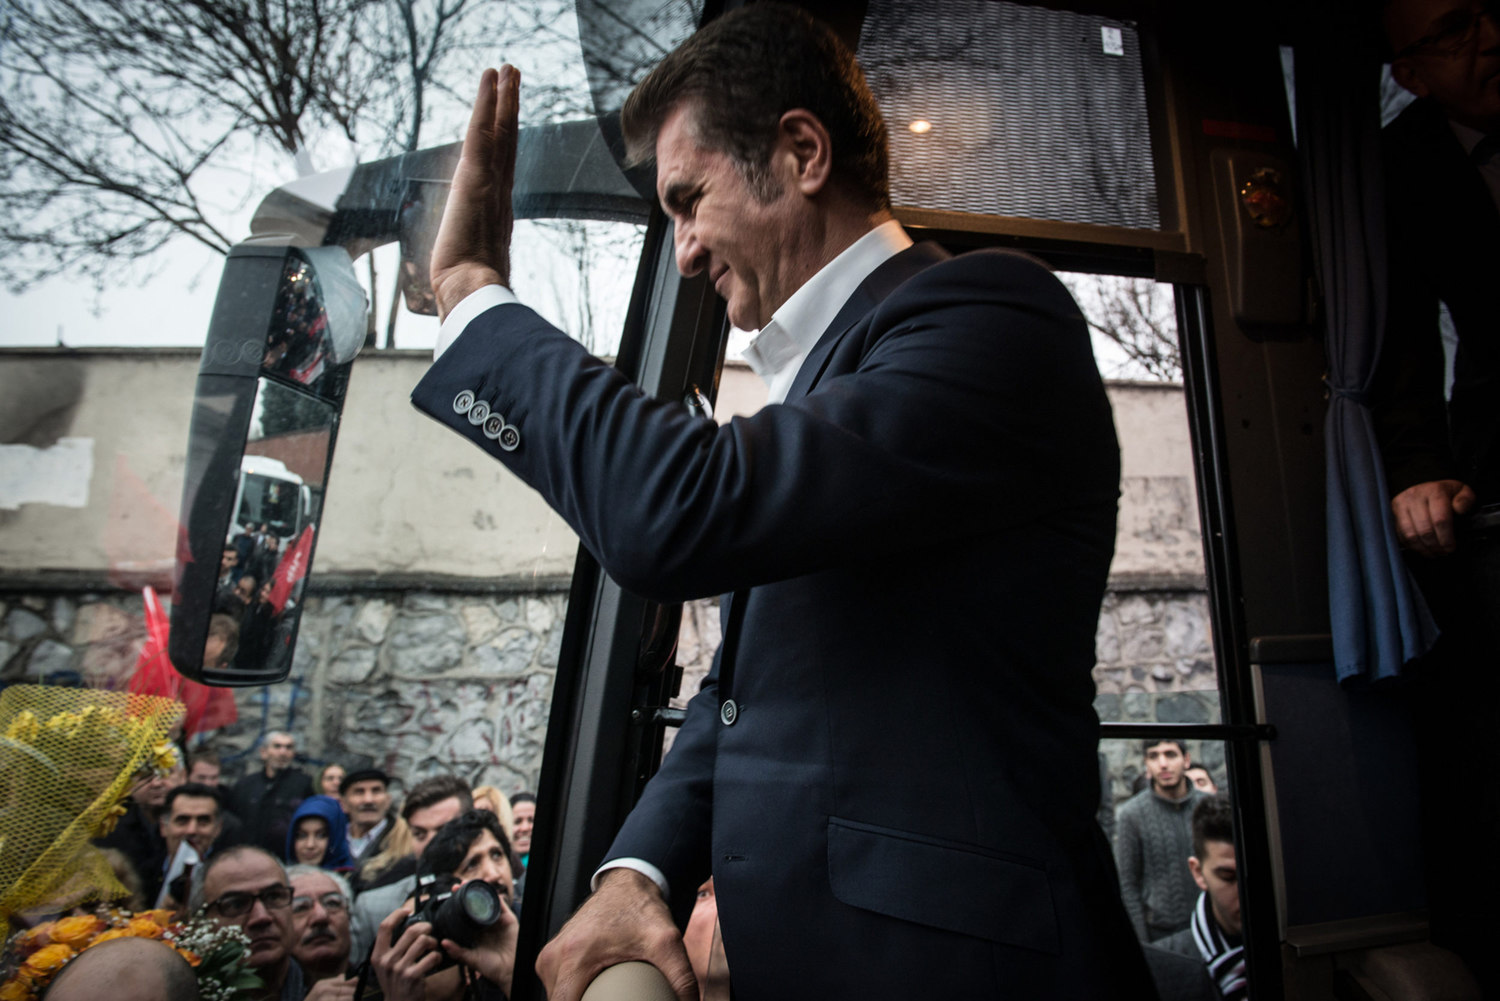  Mustafa Sarigul, candidate for Istanbul mayor stumps in Okmeydan, Istanbul Turkey on 15 February 2014.  